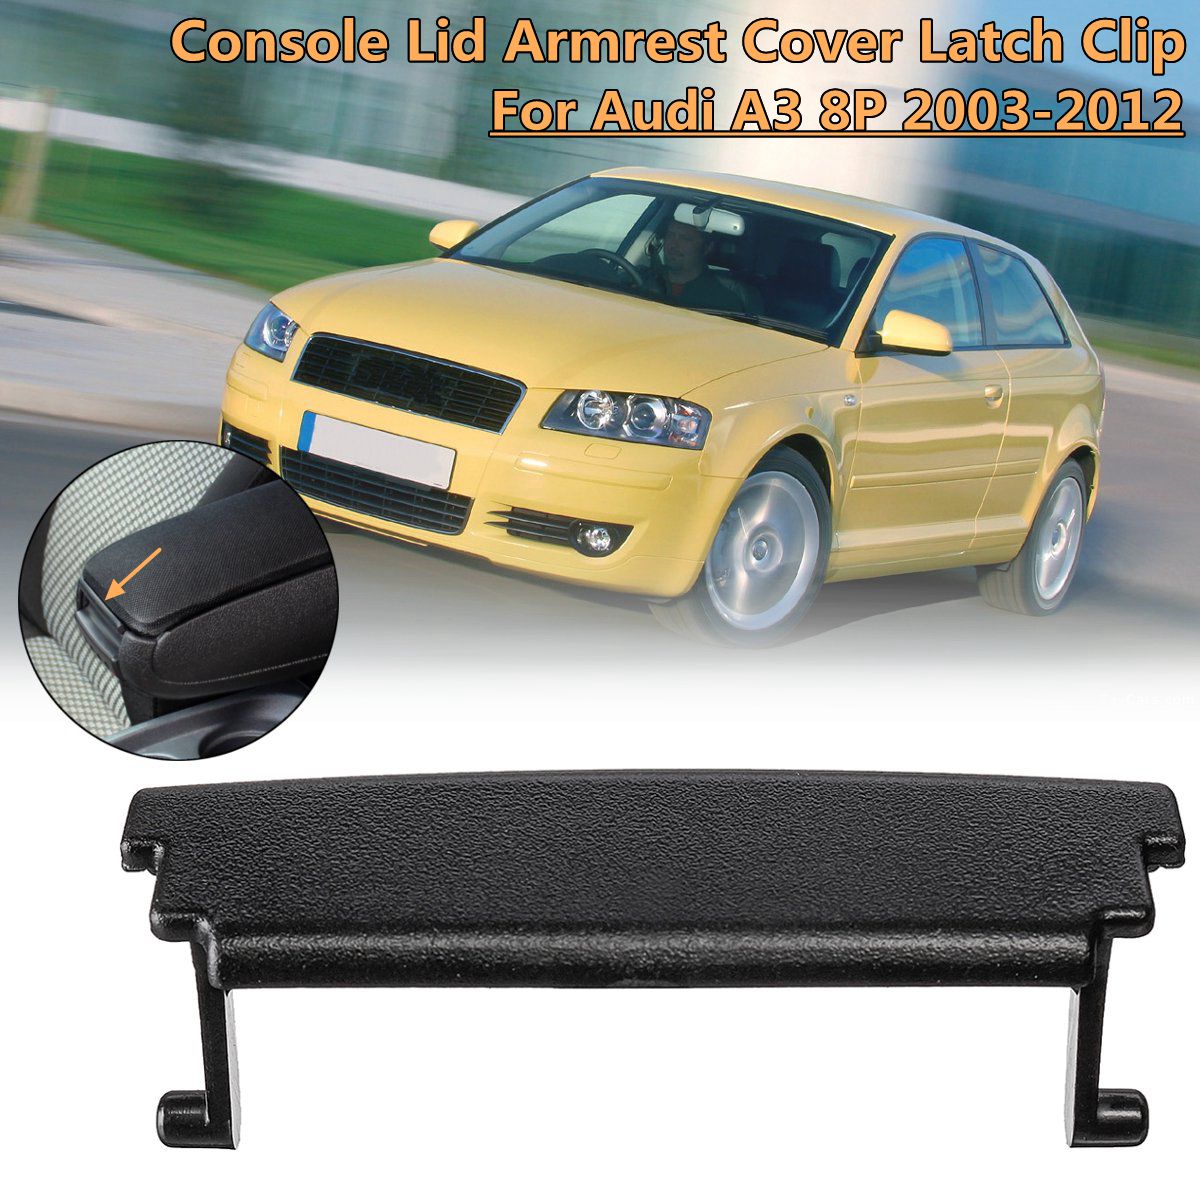 Center Console Armrest Cover Latch Clip Cover Latch Clip Catch For Audi A3 8P 2003 2004 2005 2006 2007~2012